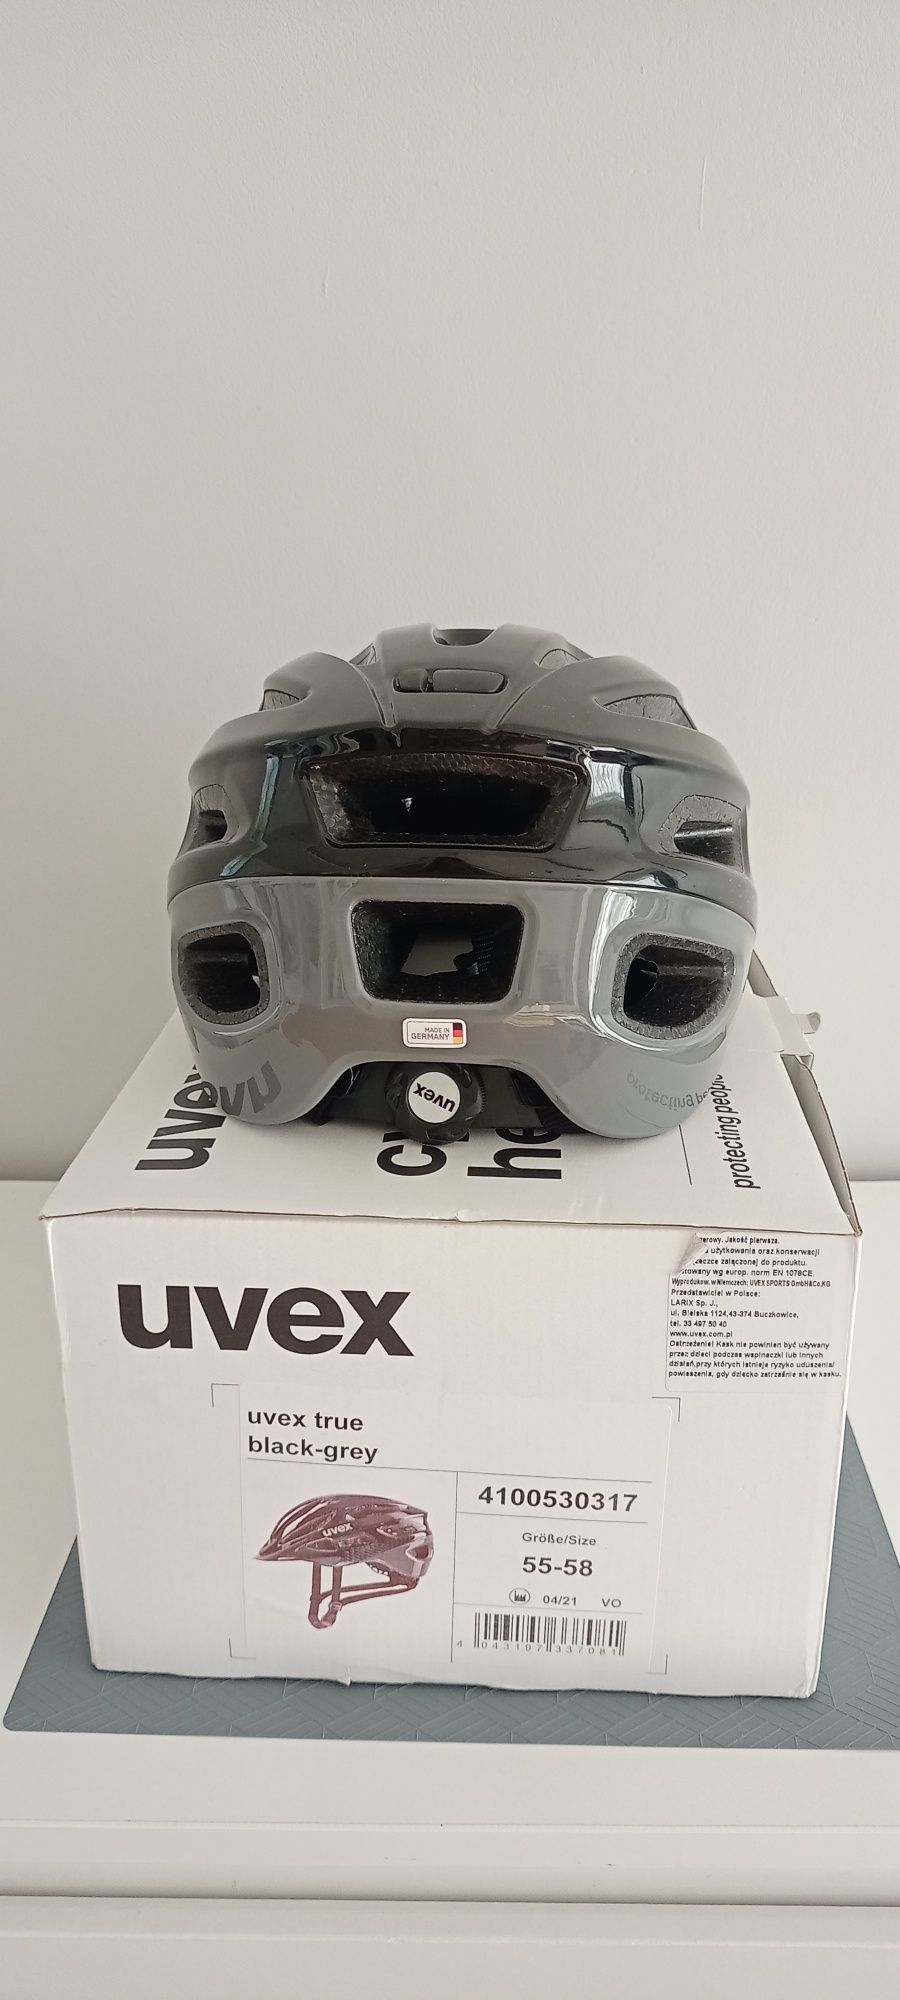 Kask rowerowy Uvex nowy